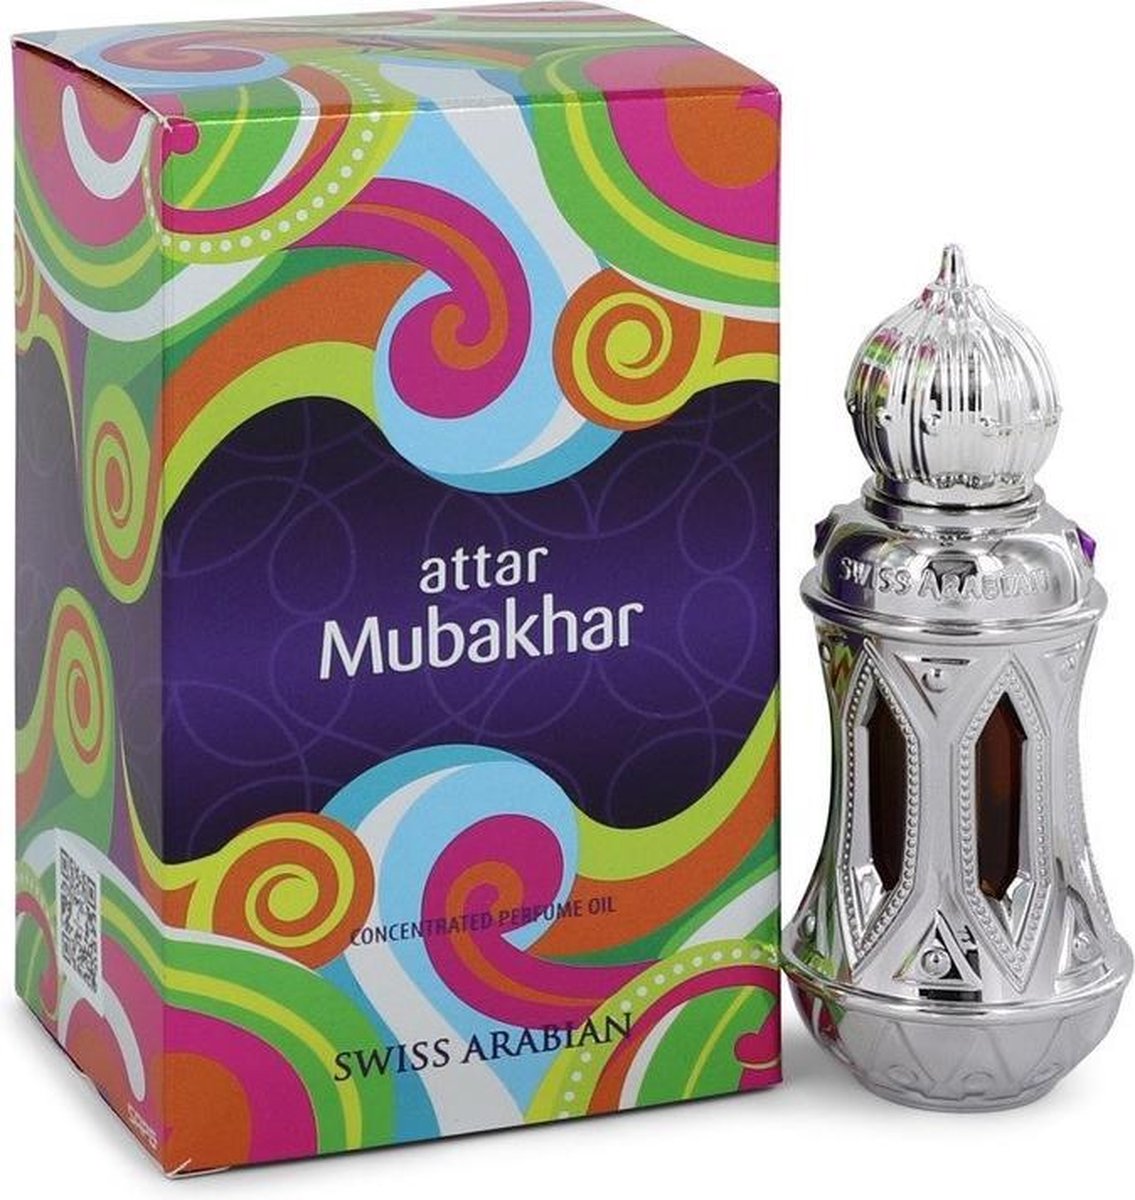 Swiss Arabian Attar Mubakhar by Swiss Arabian 20 ml - Concentrated Perfume Oil